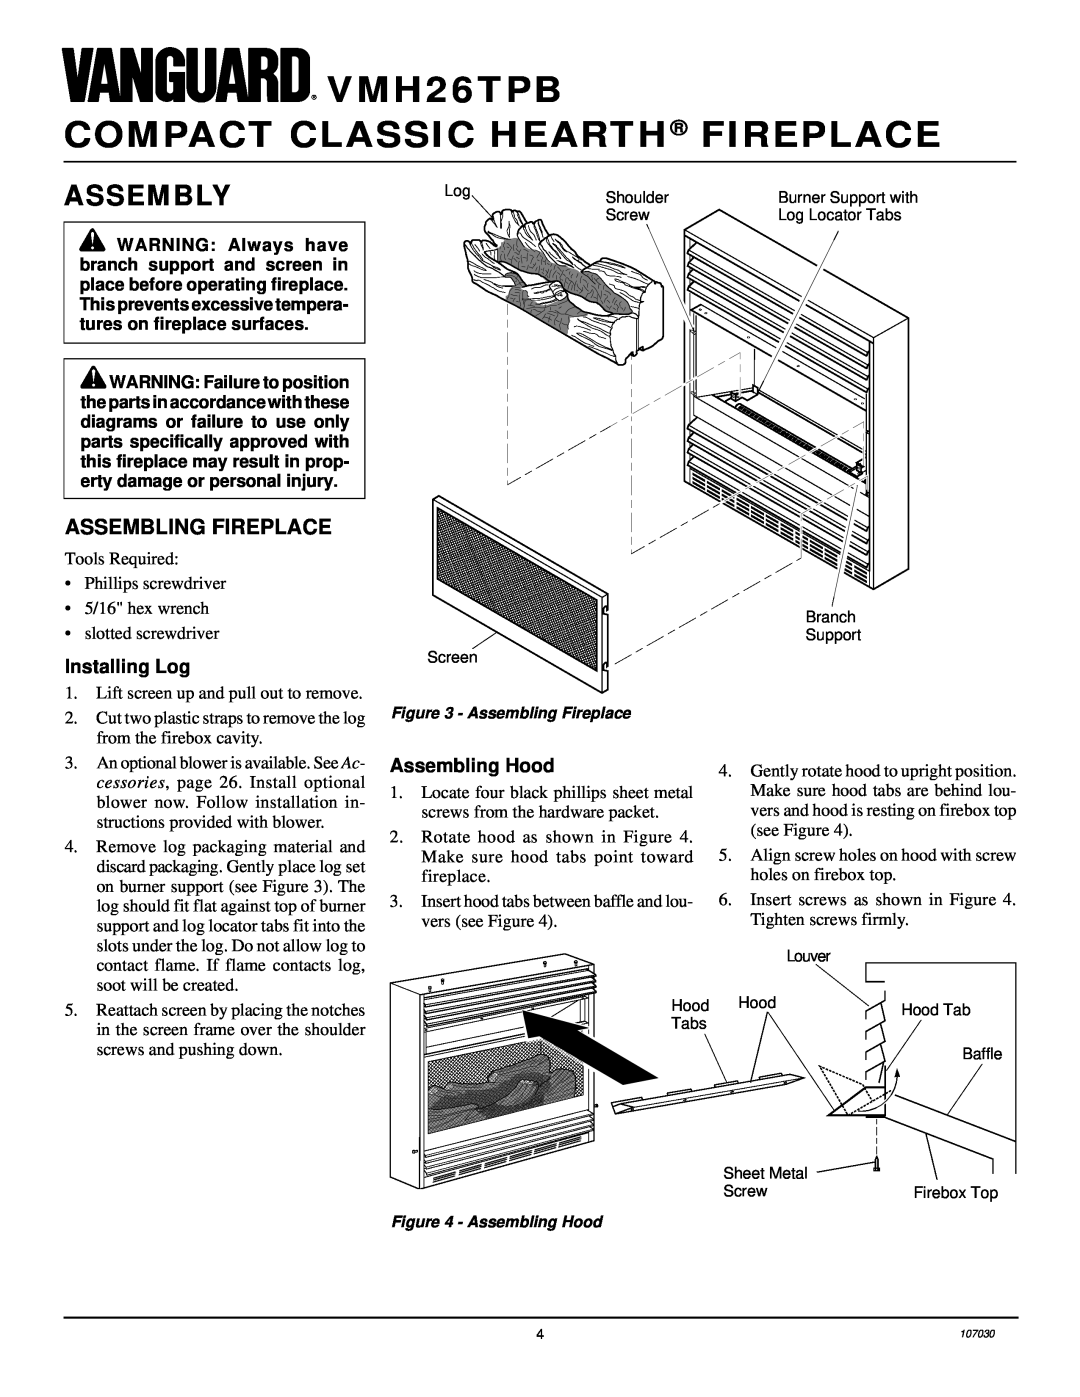 Desa VMH26TPB 14 installation manual Assembly, Assembling Fireplace, Installing Log, Assembling Hood 